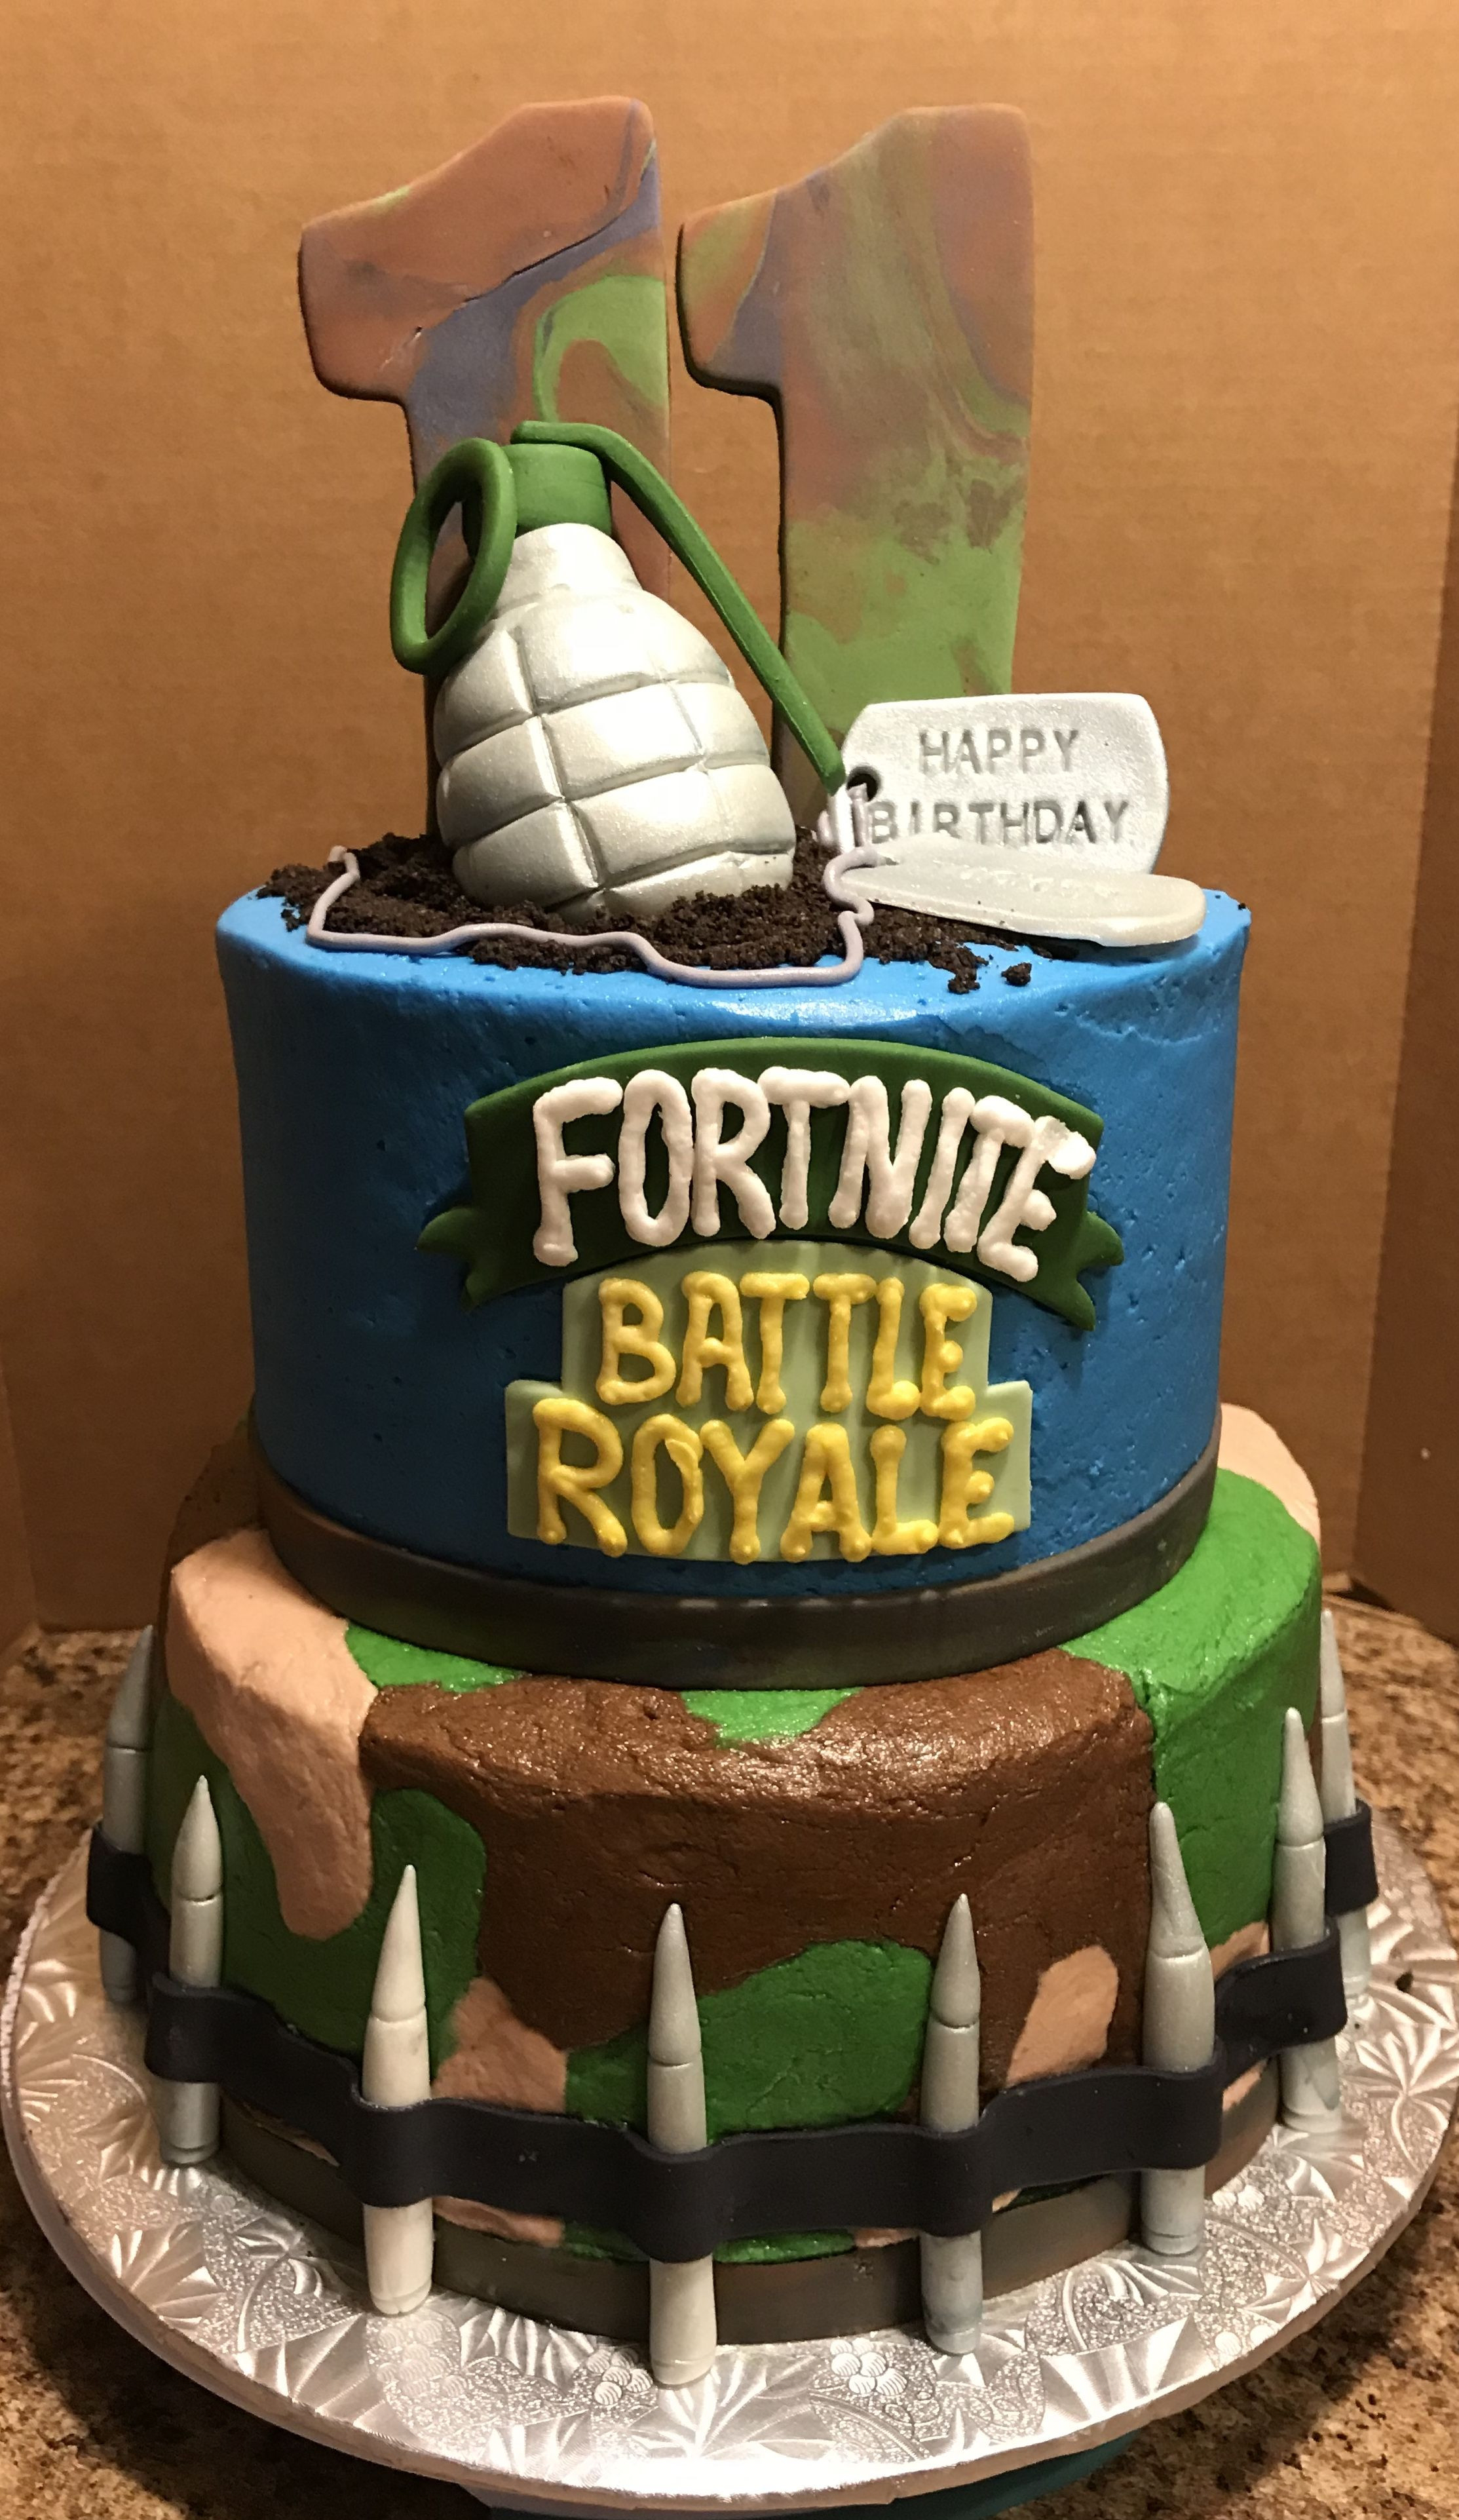 Fortnite Geburtstagstorte
 Fortnite Battle Royale Birthday Cake